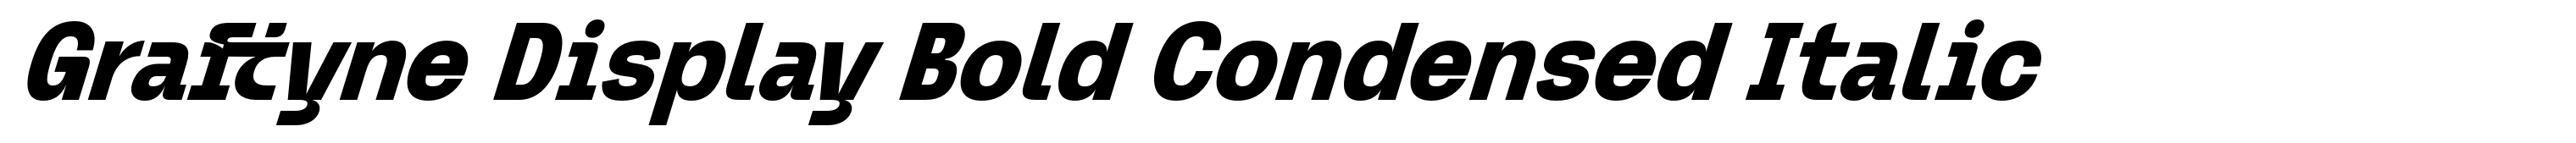 Graftyne Display Bold Condensed Italic